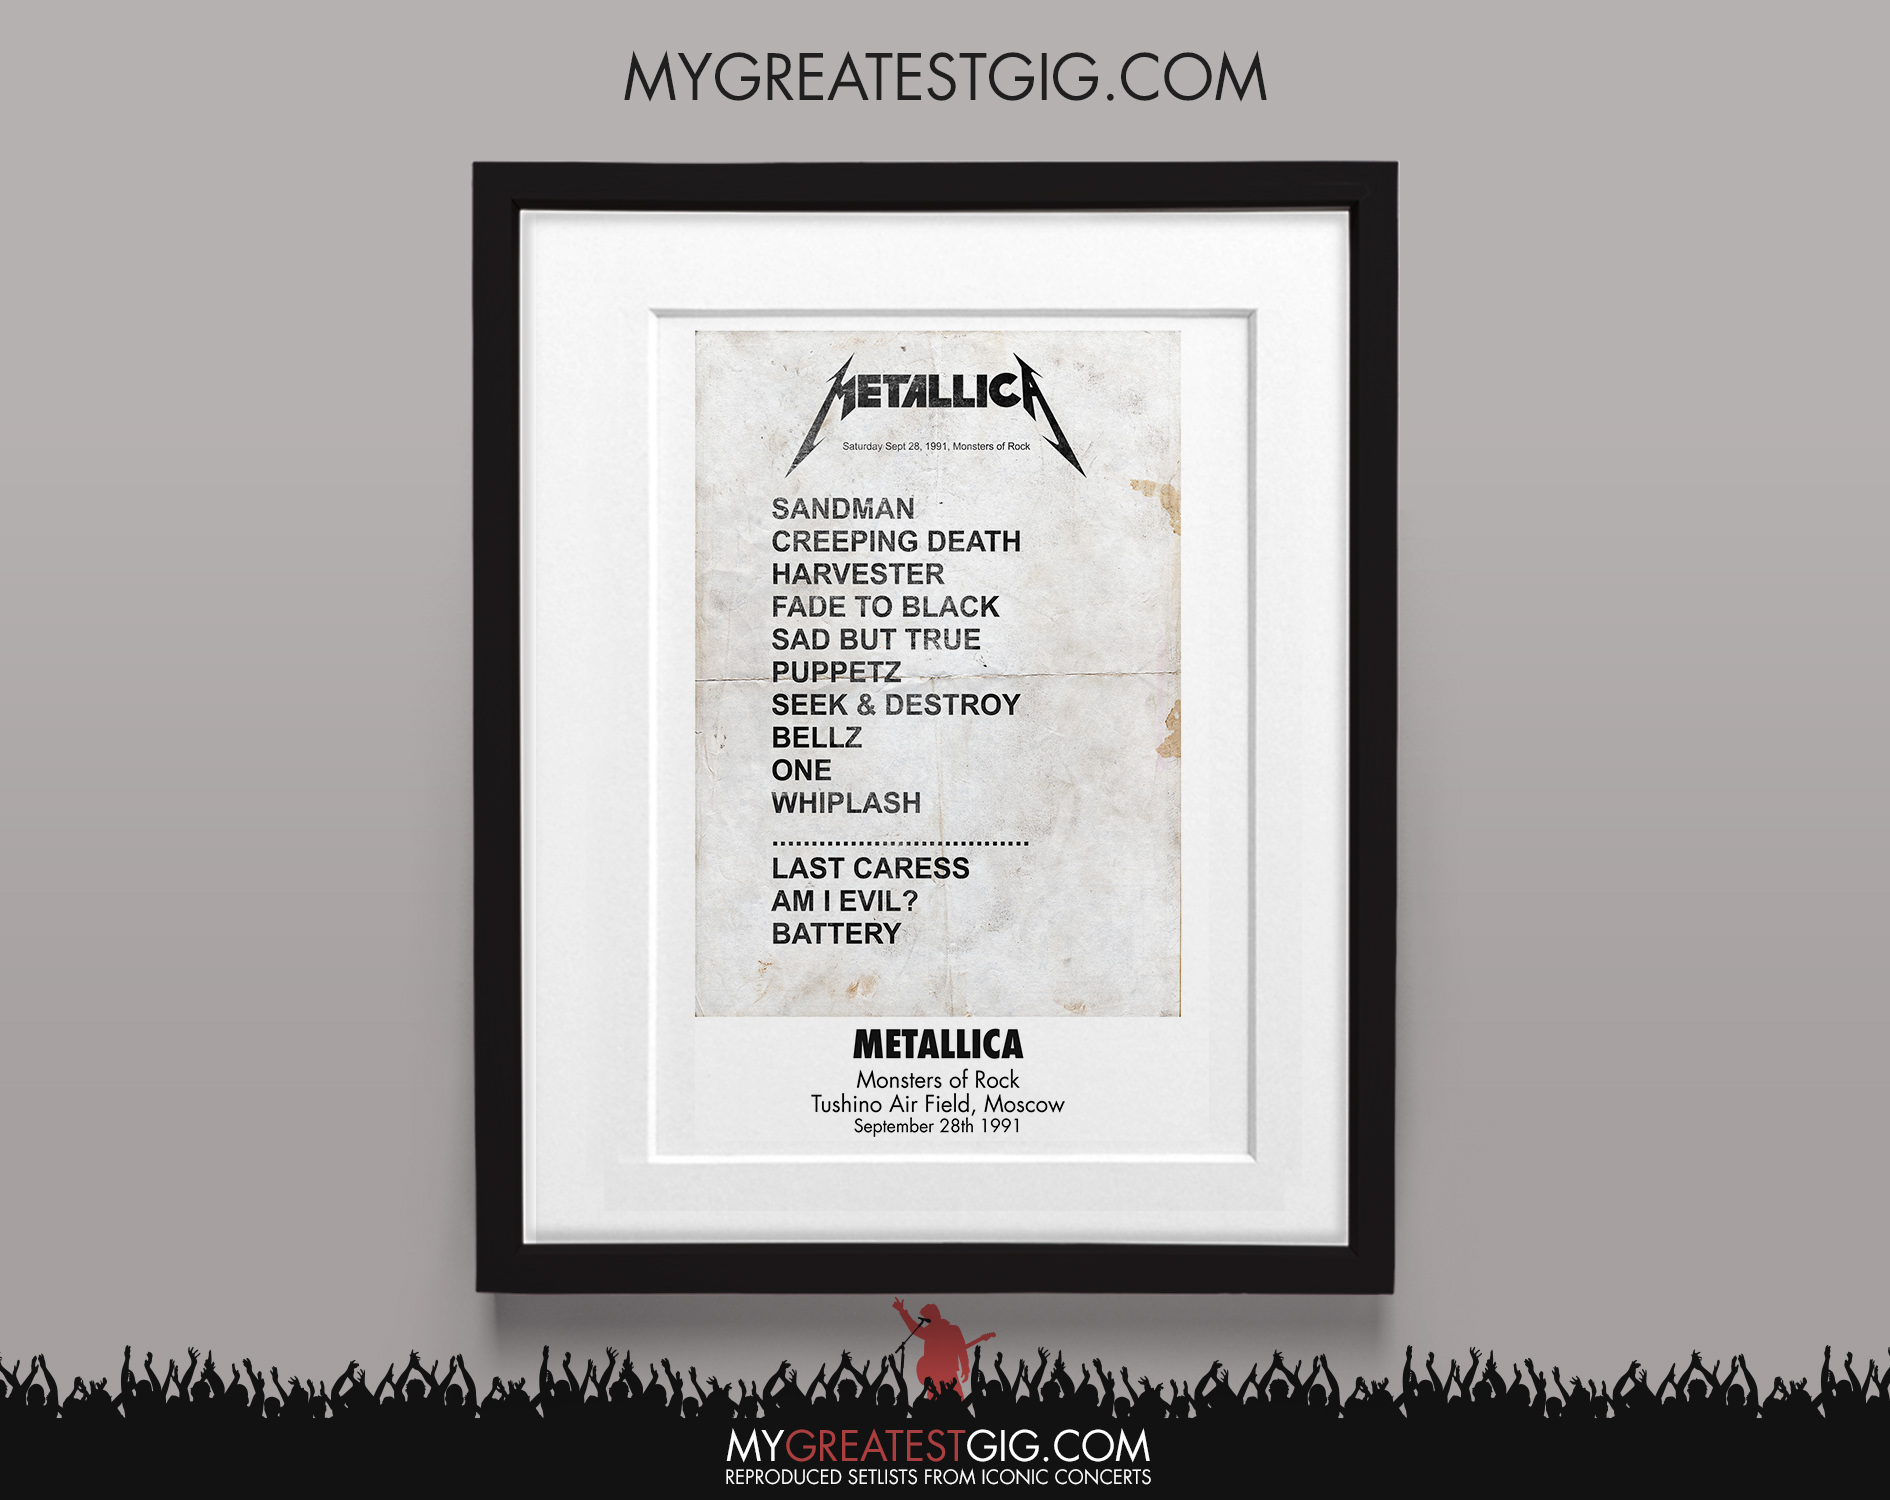 Metallica moscow 1991 song list